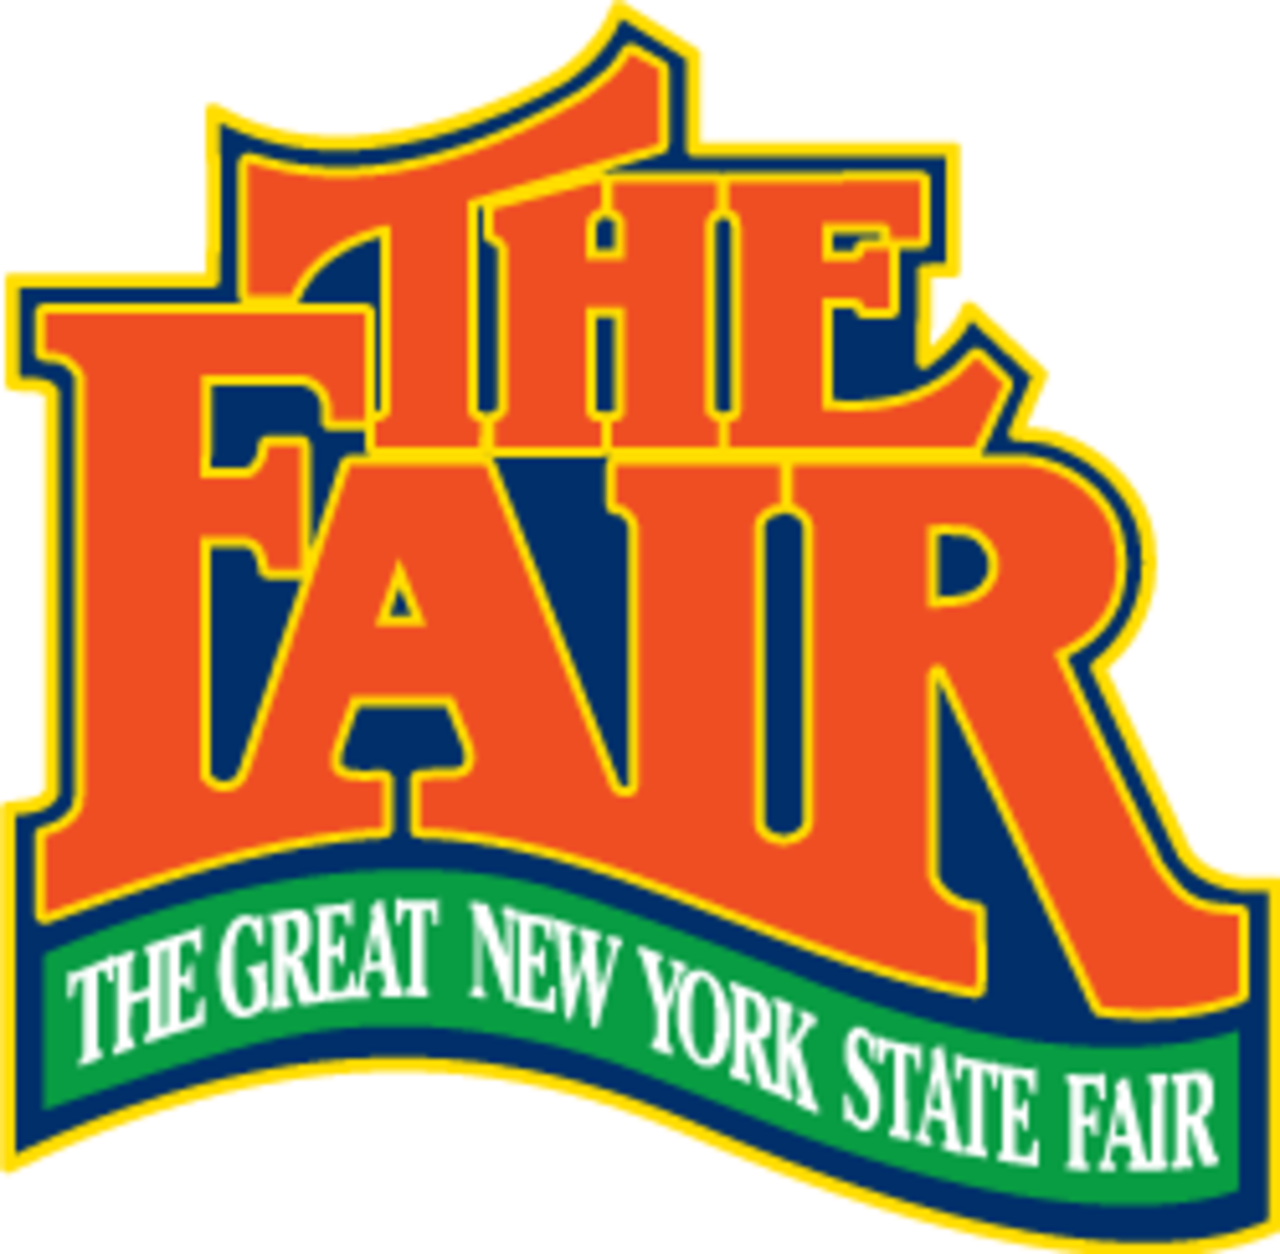 New York State Fair - Great New York State Fair (1280x1254)